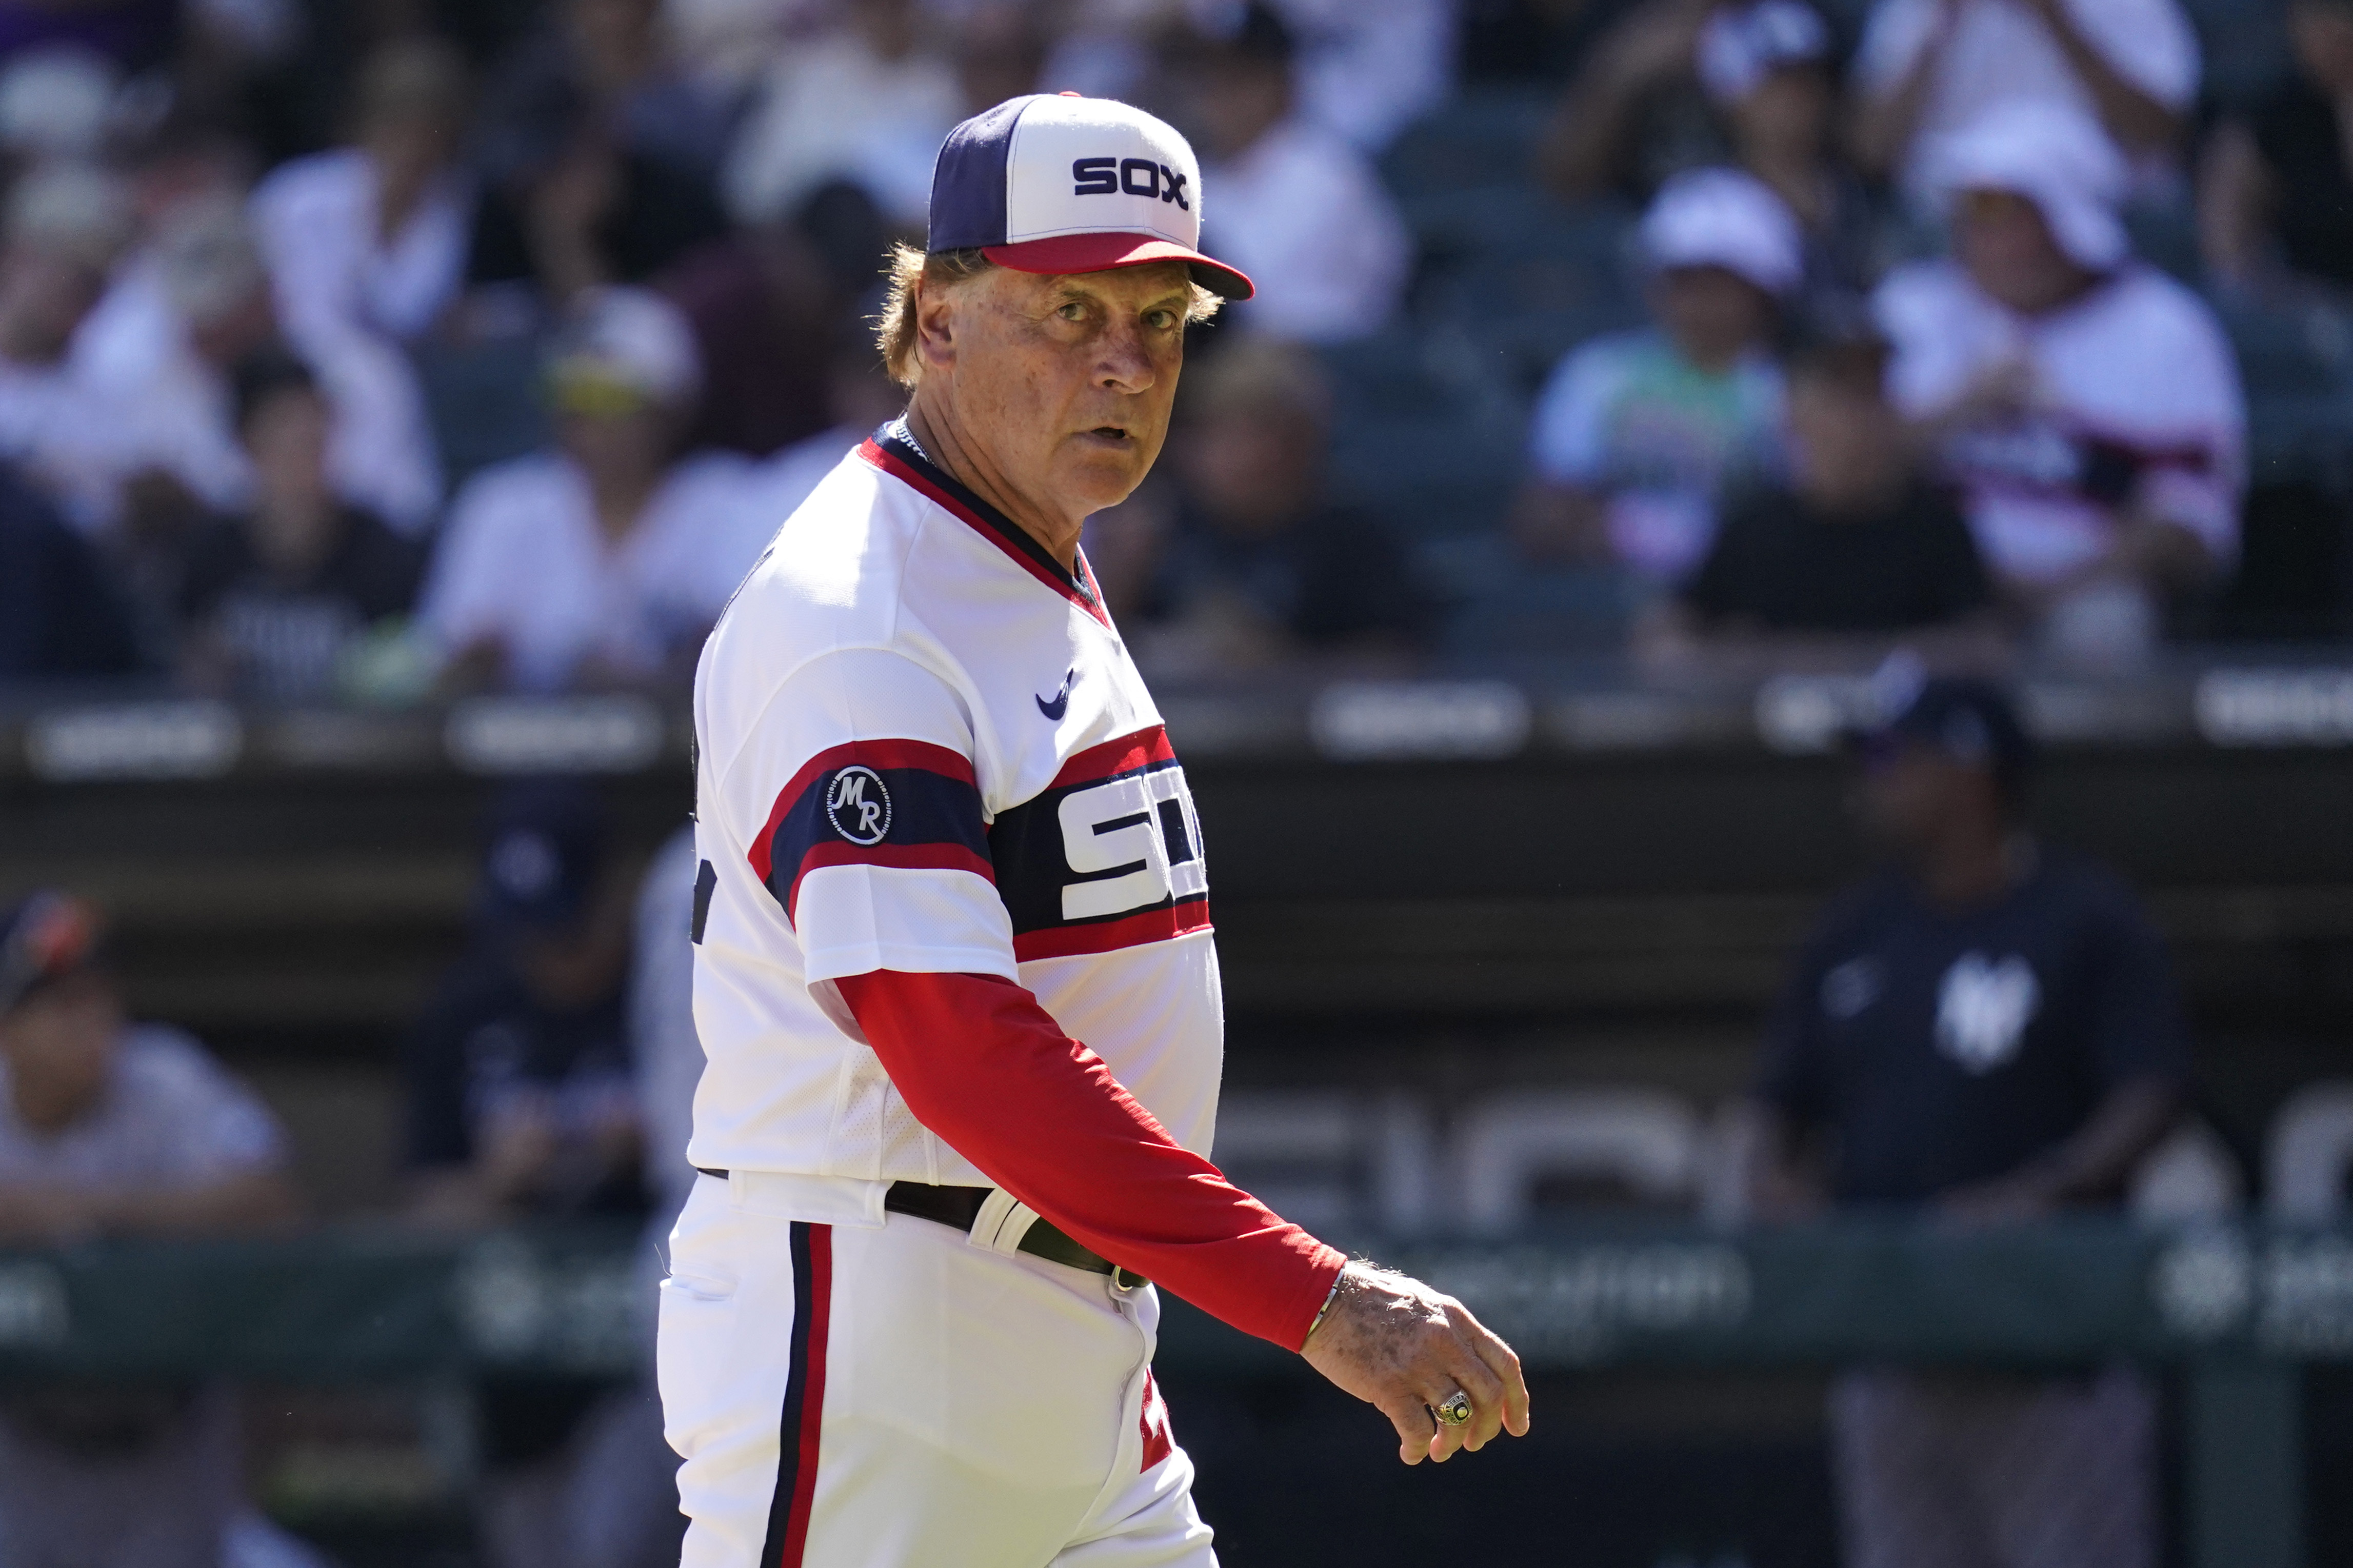 Tony La Russa, Biography, White Sox, Cardinals, & Facts